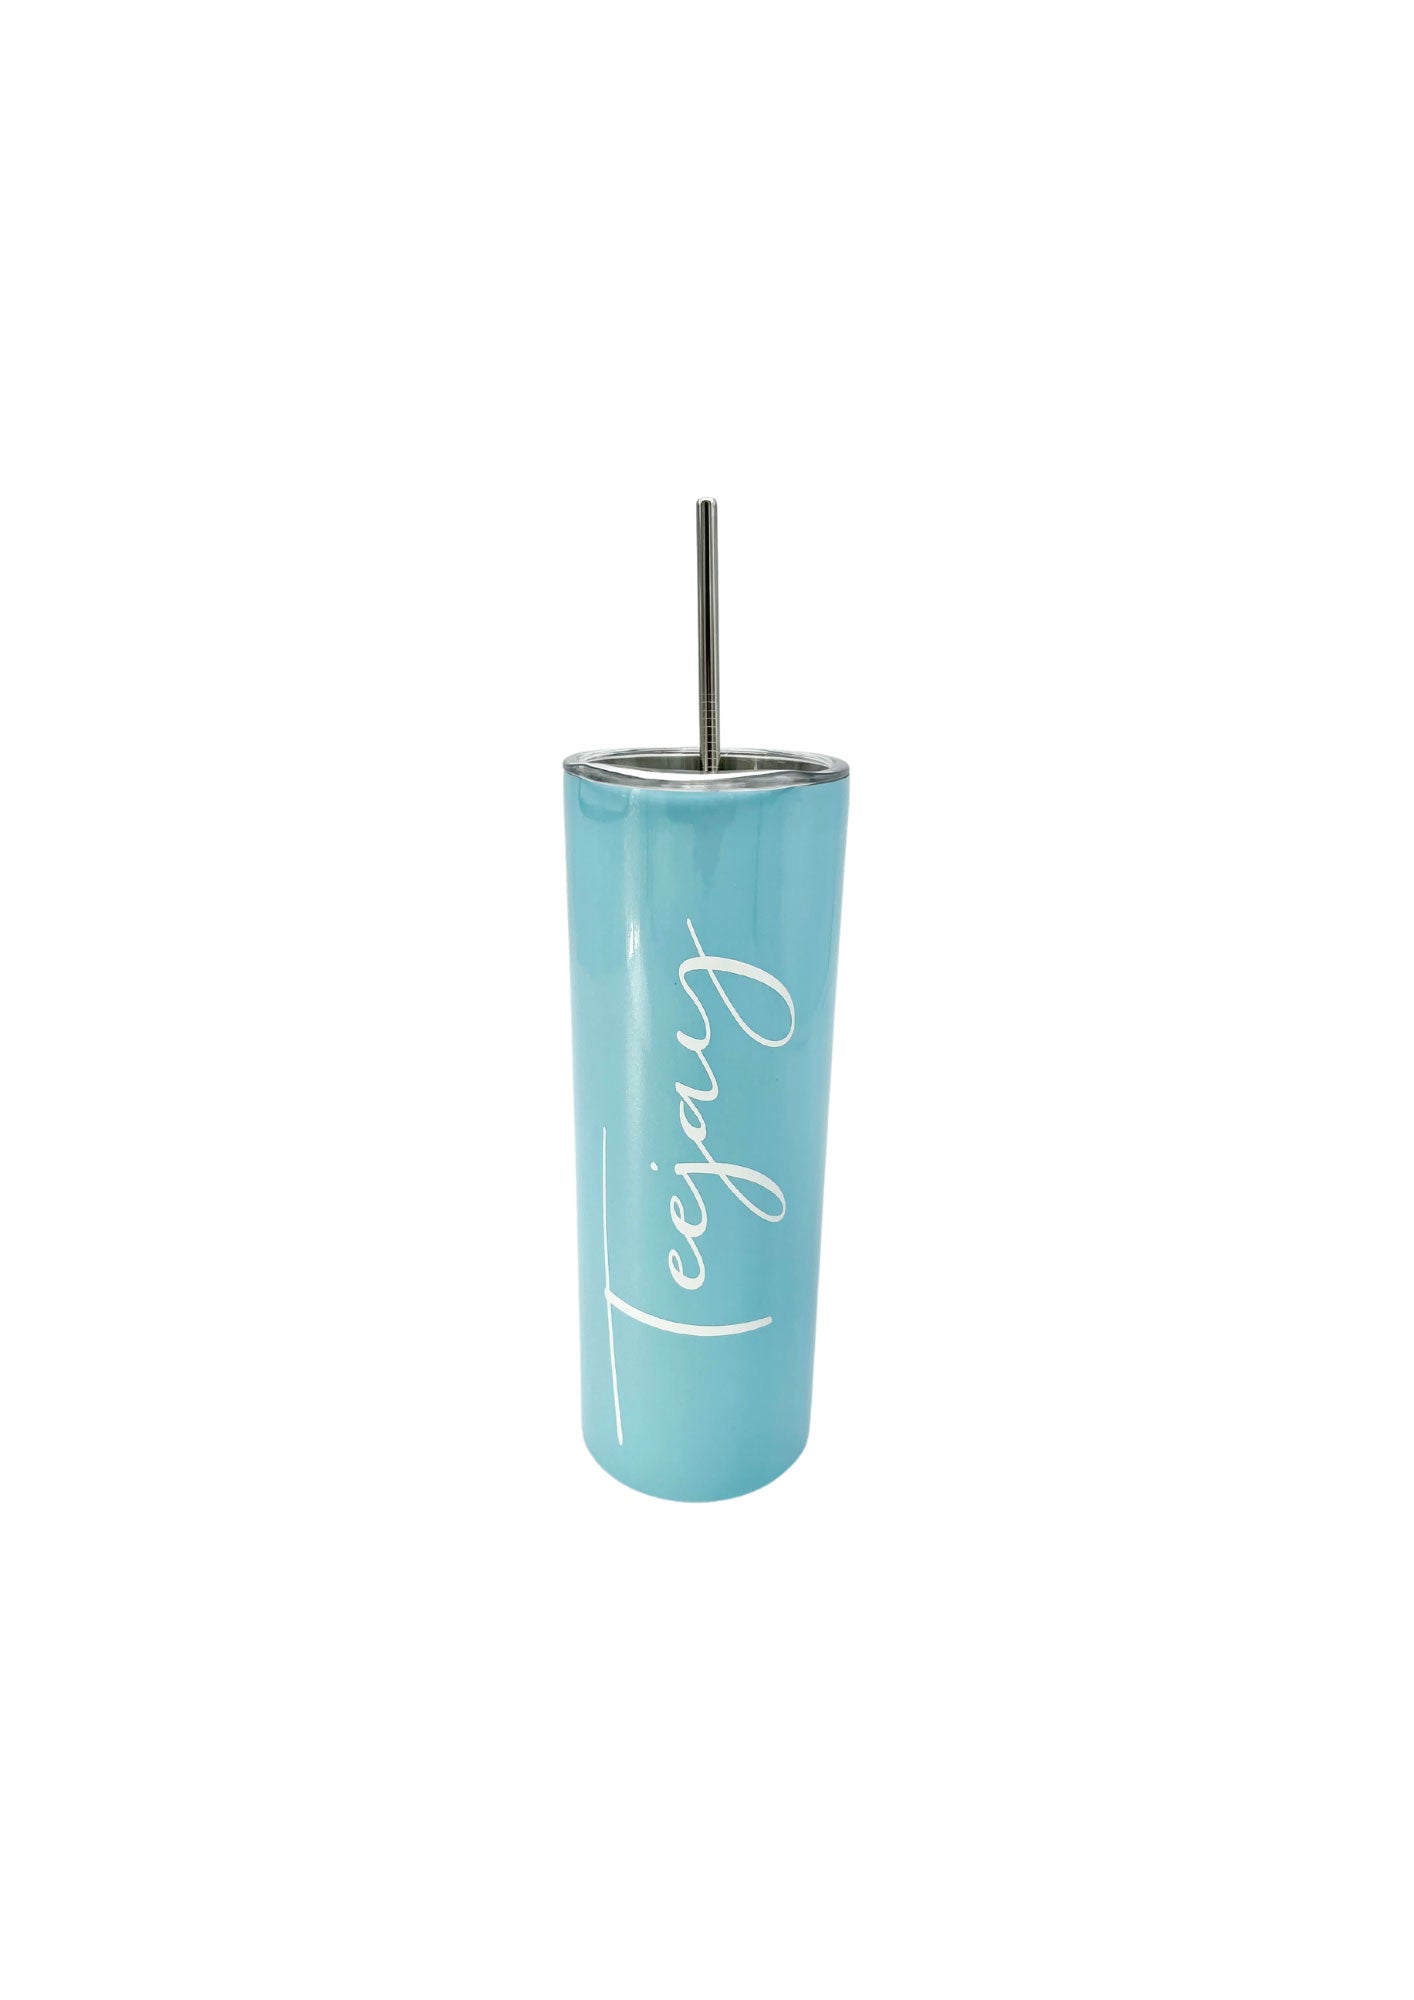 Blue Personalised Cup Insulated tumbler coffee cups insulated mugs hydroflask personalised gift dubai